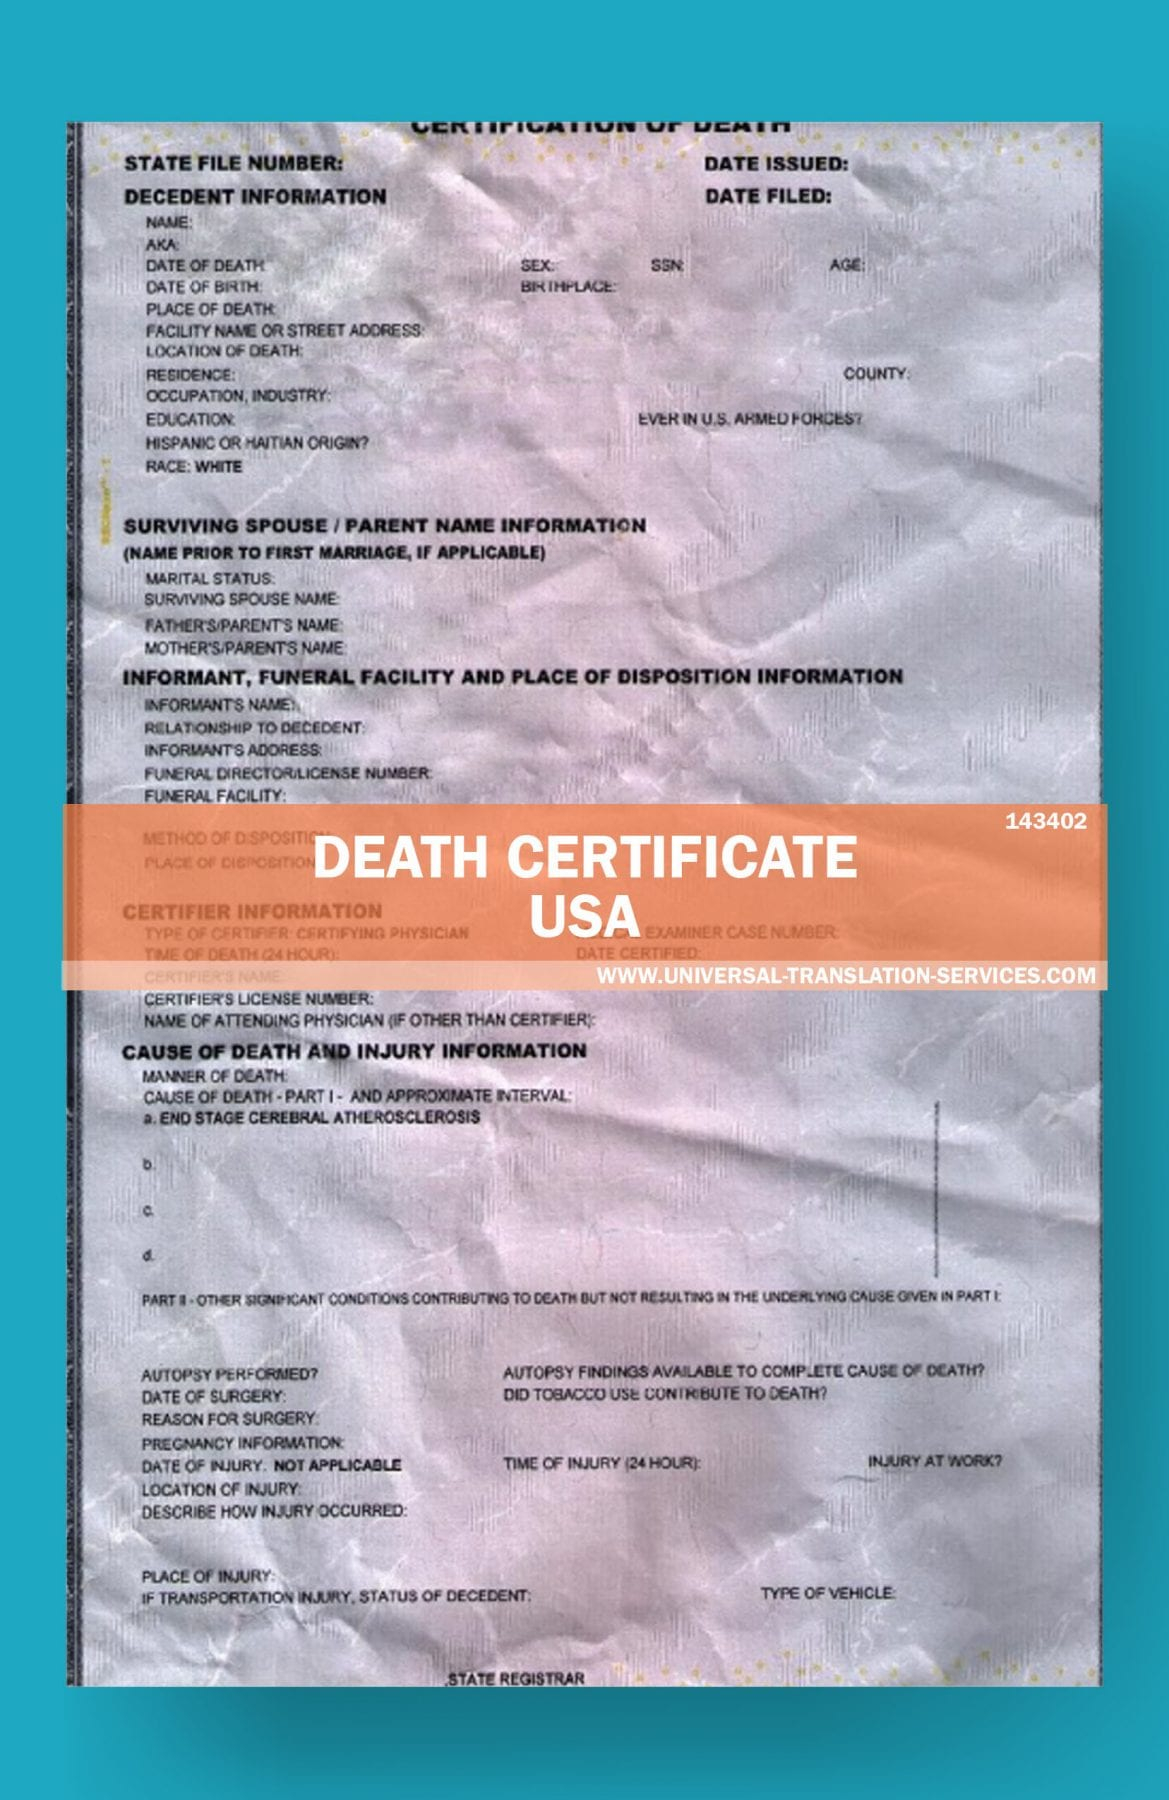 Death Certificate USA #10 For Death Certificate Translation Template